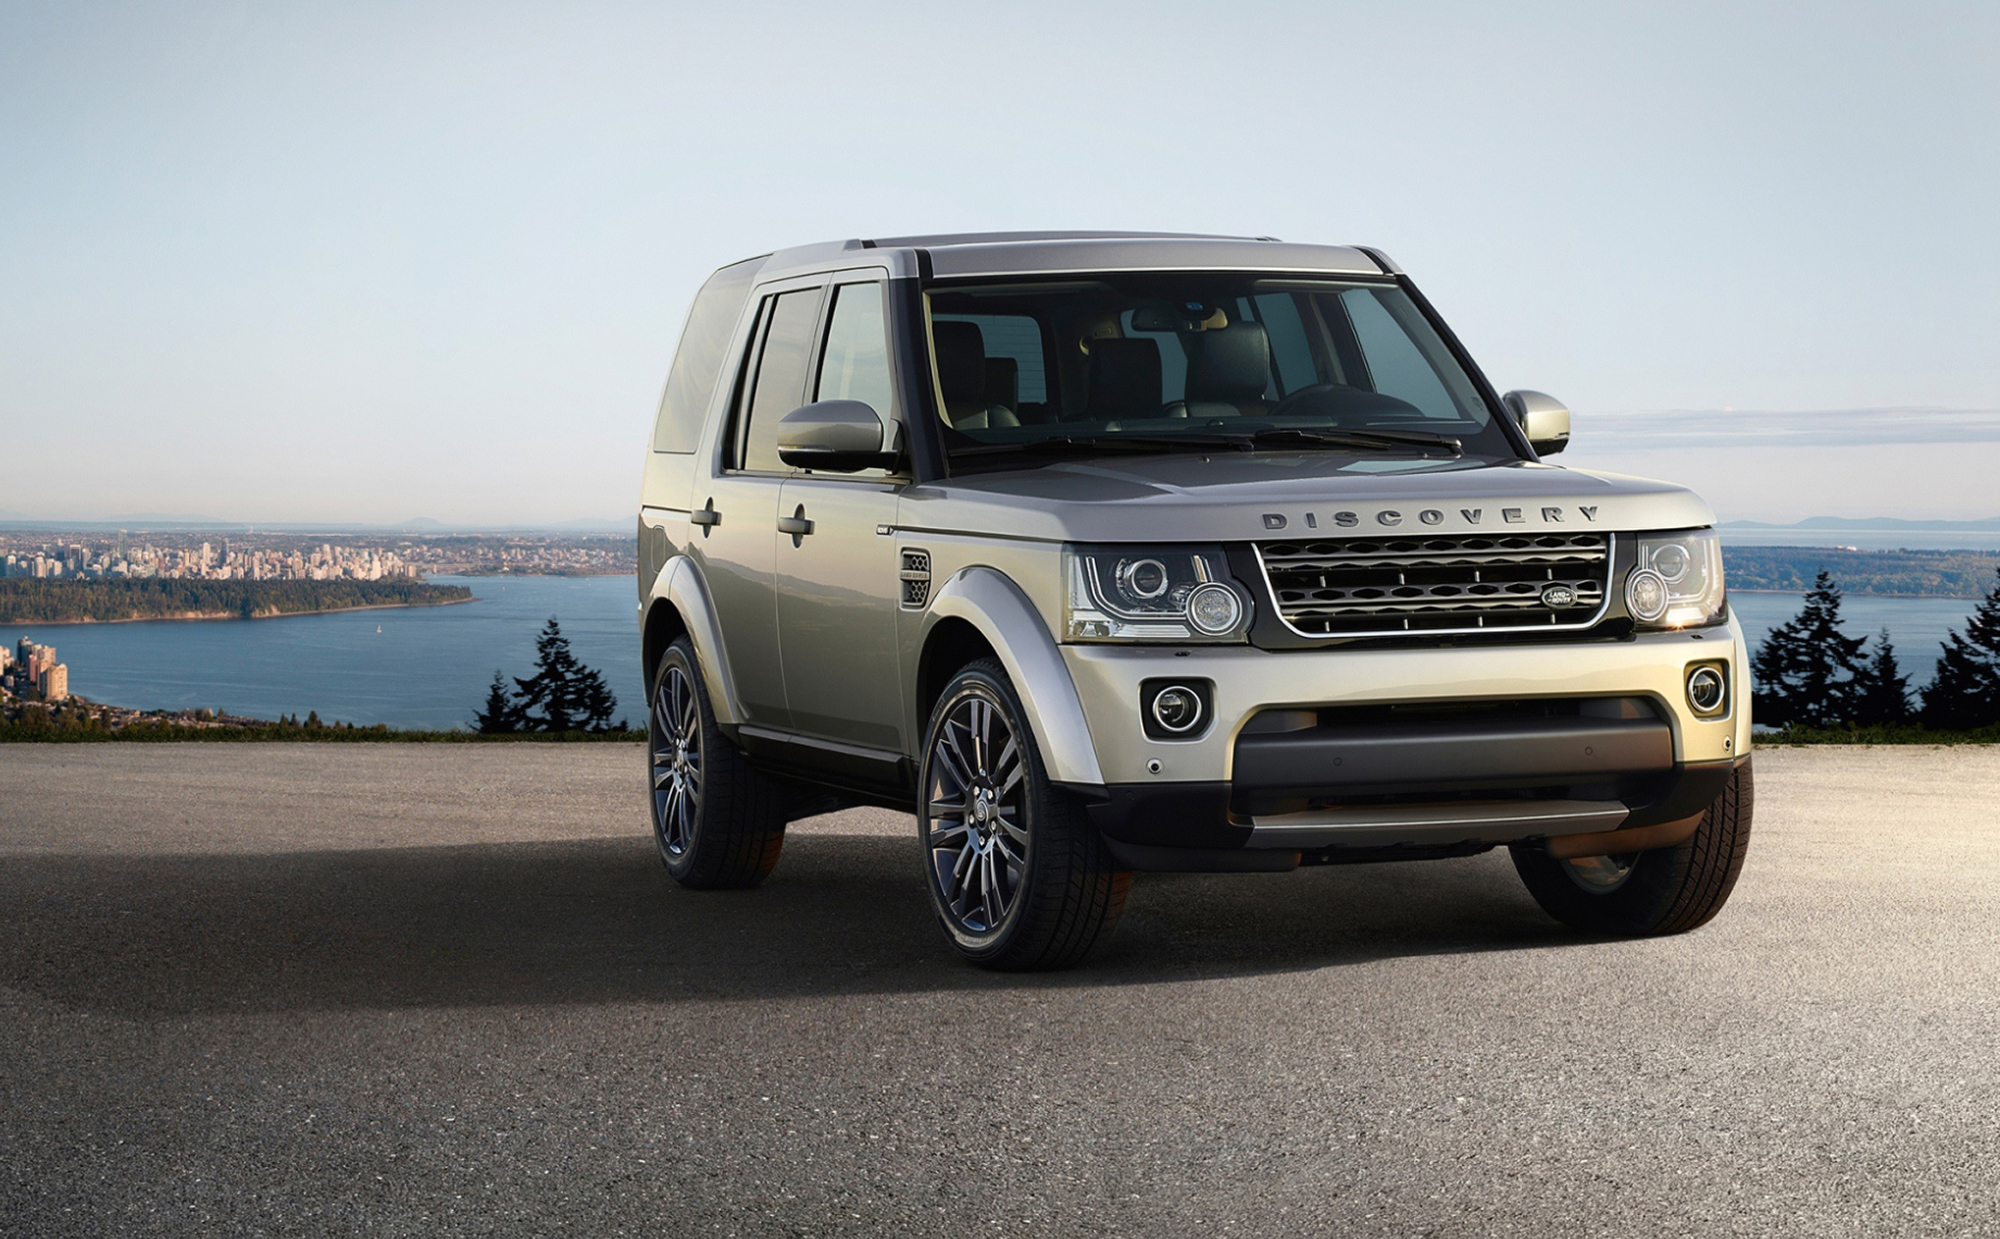 2016 Land Rover Discovery Landmark, Graphite models join ...